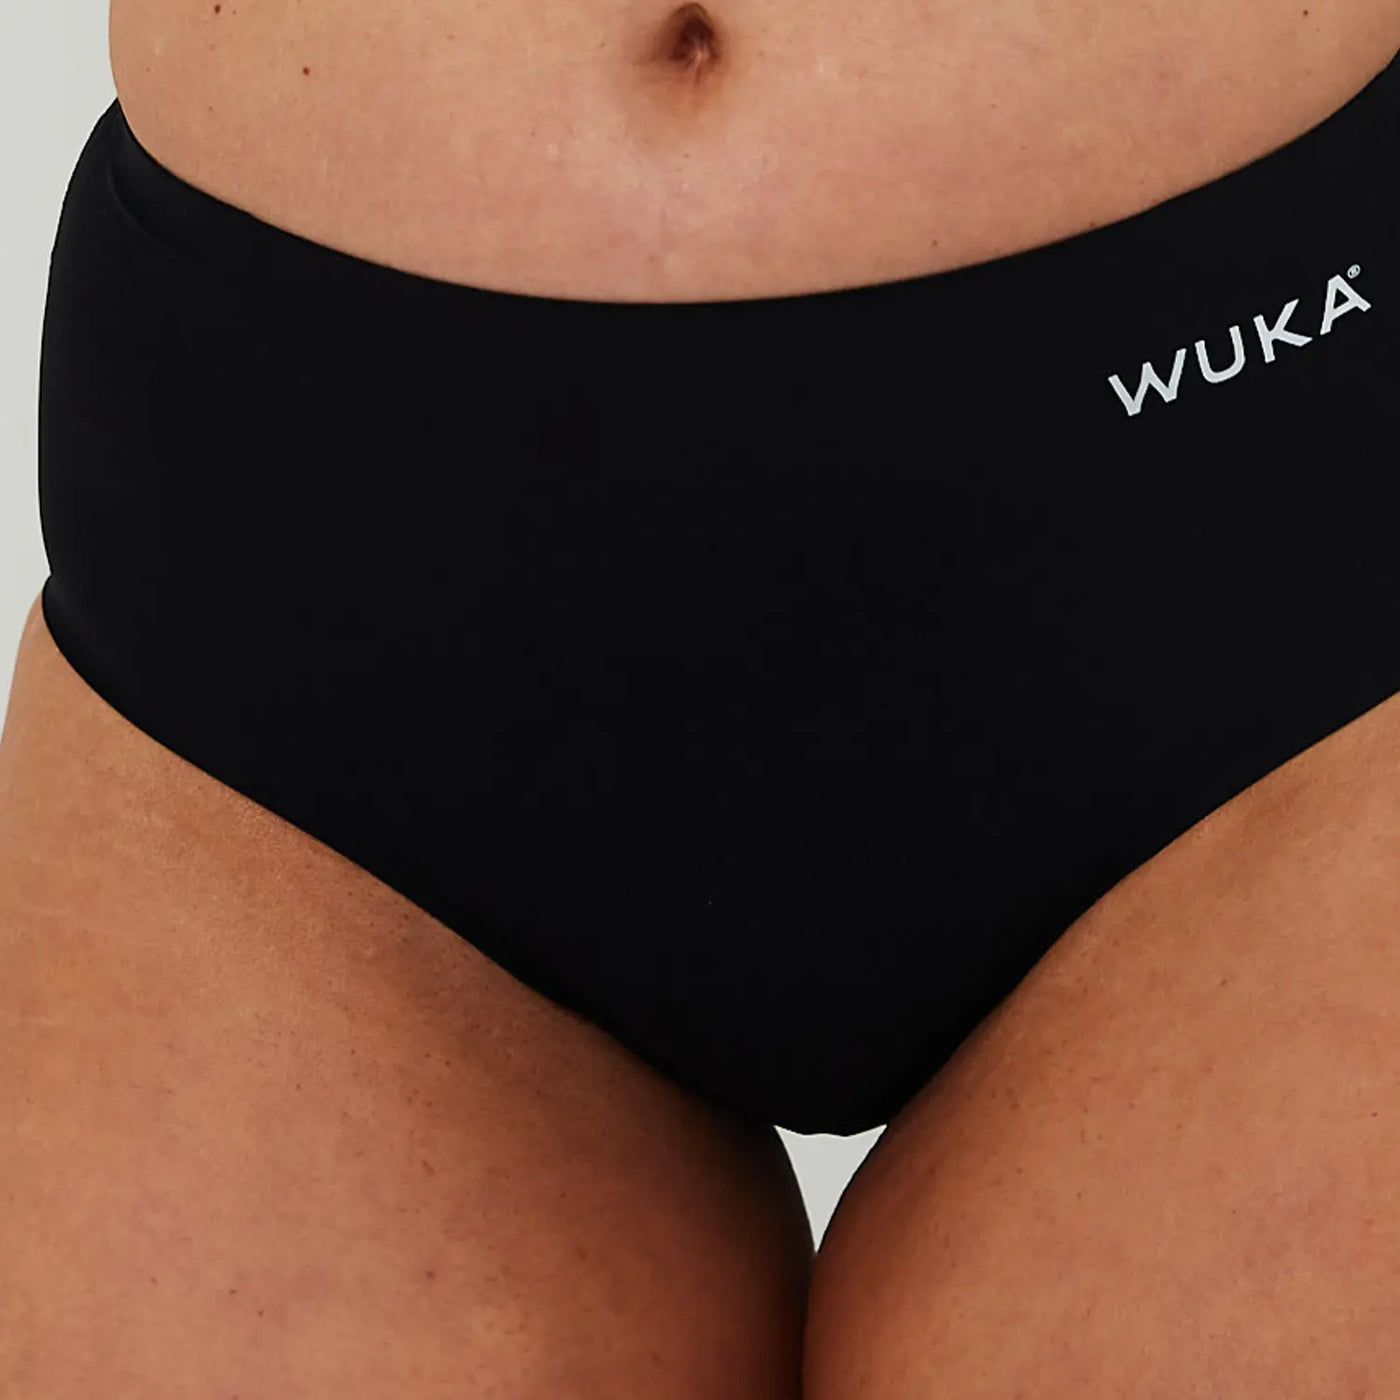 WUKA Period Stretch Midi Brief Style Super Heavy Absorbency Black Colour Close up Size 1